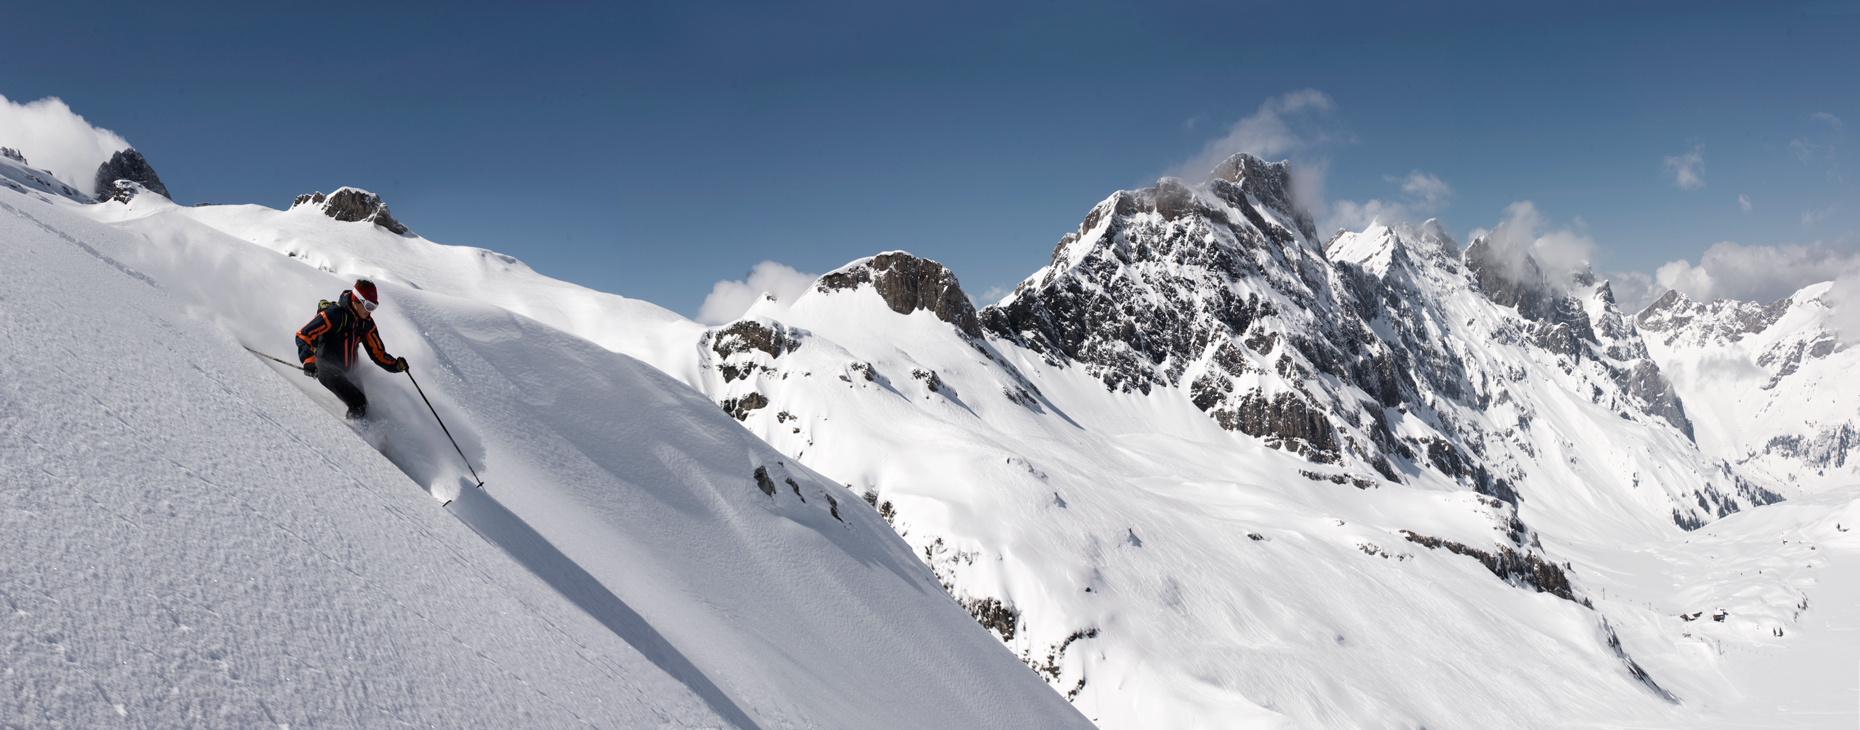 Jon Wyatt Photography - skier in deep snow in Engelberg, Switzerland